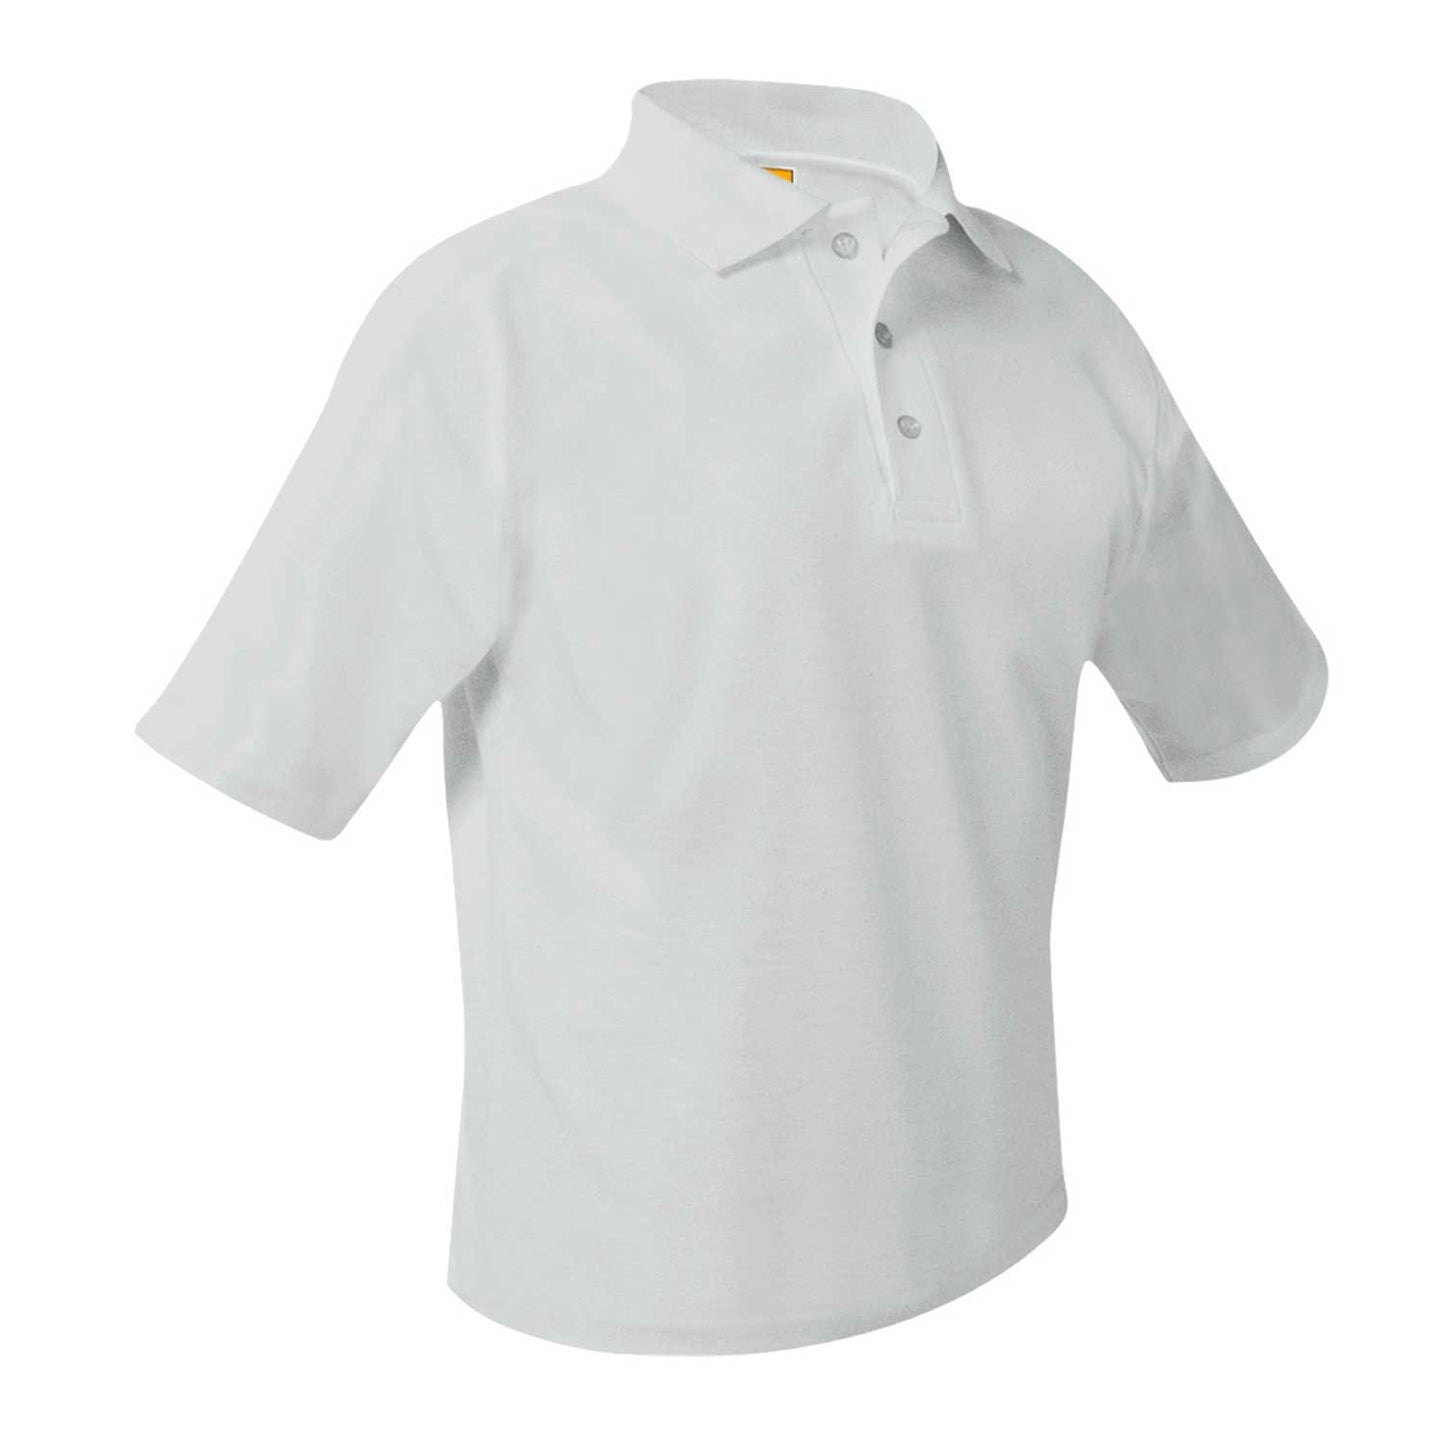 Unisex Pique Polo Shirt, Short Sleeves, Hemmed w/ Logo - 1102